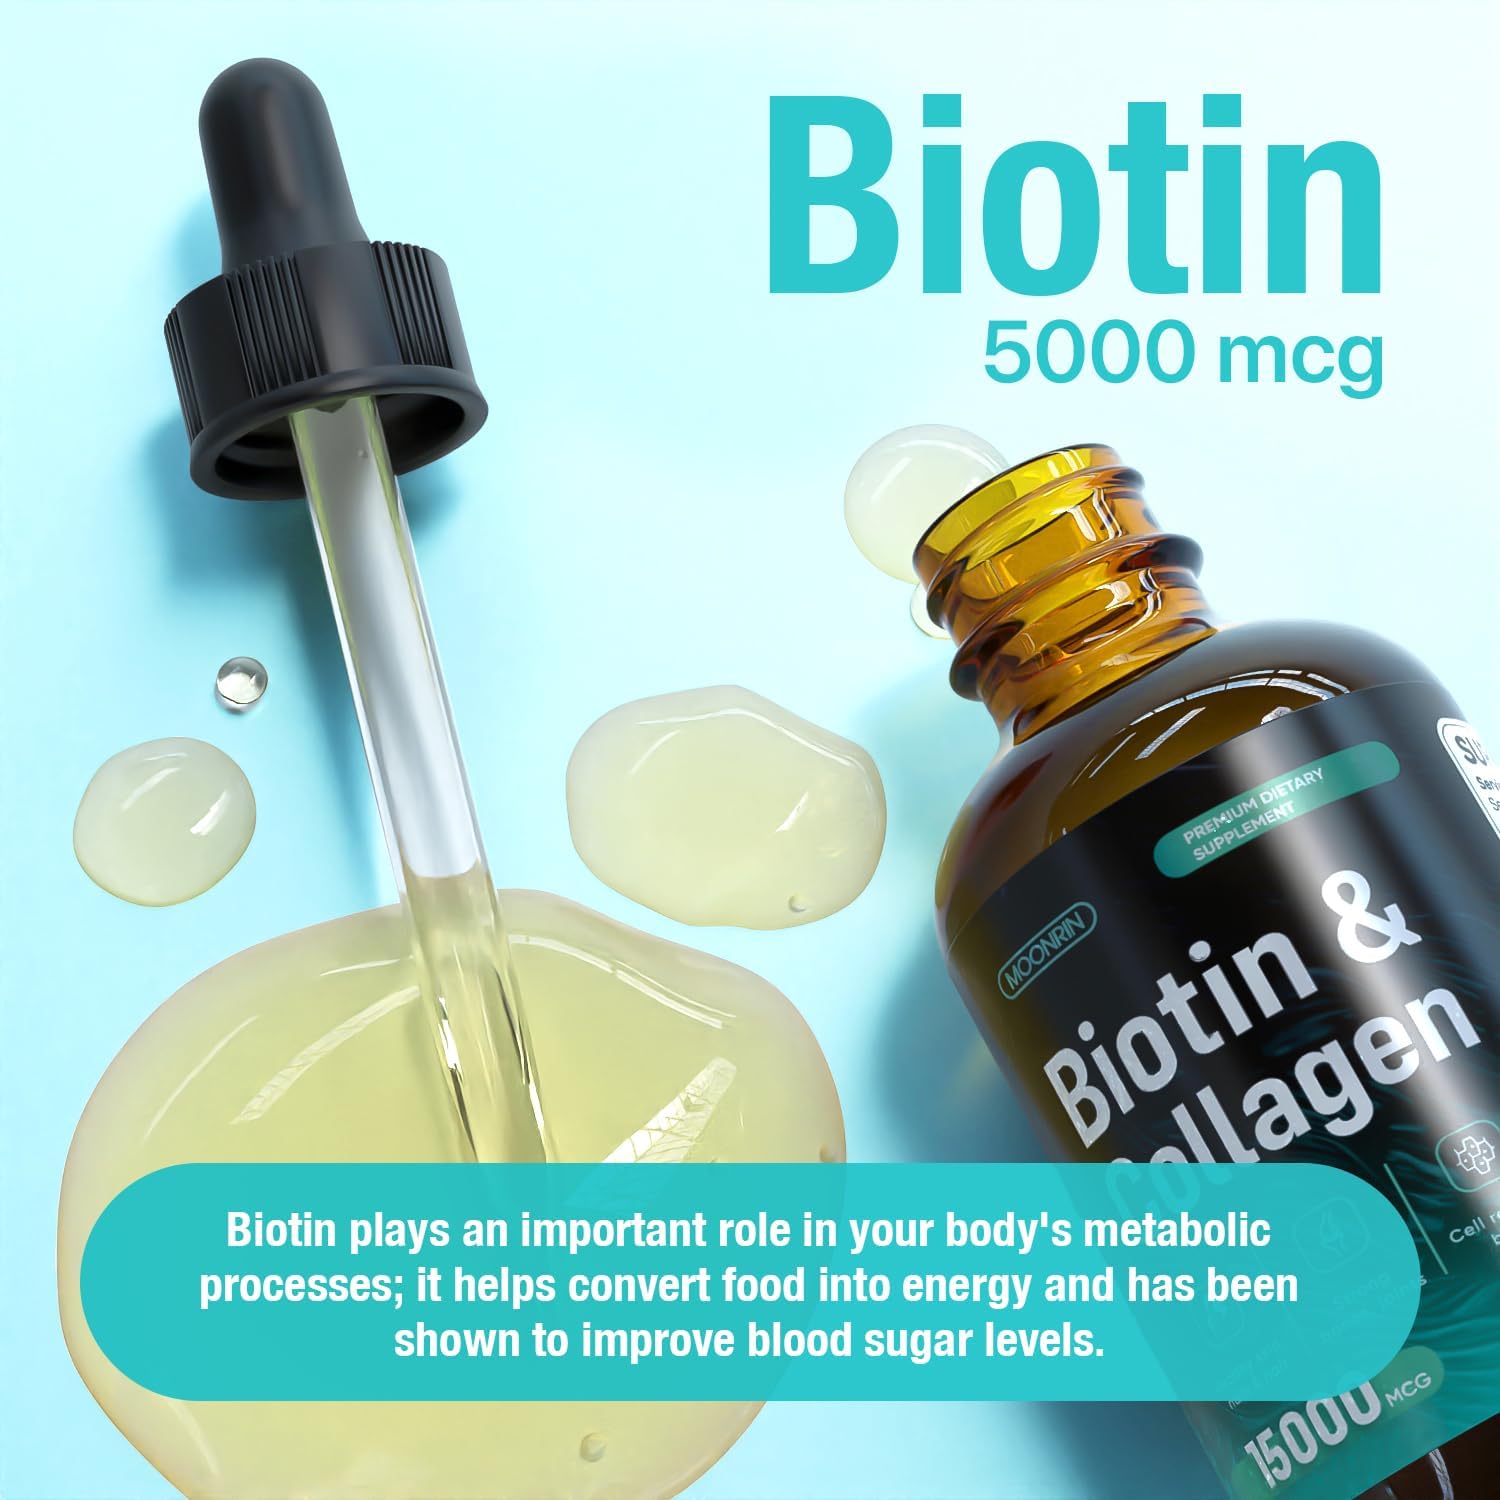 Collagen and Biotin Liquid Drops 15000mcg – Natural Hair Skin Nails Vitamins – Support Fast Hair Growth – Collagen 10000mcg, Biotin 5000mcg – Rapid Absorption – 2 Fl Oz